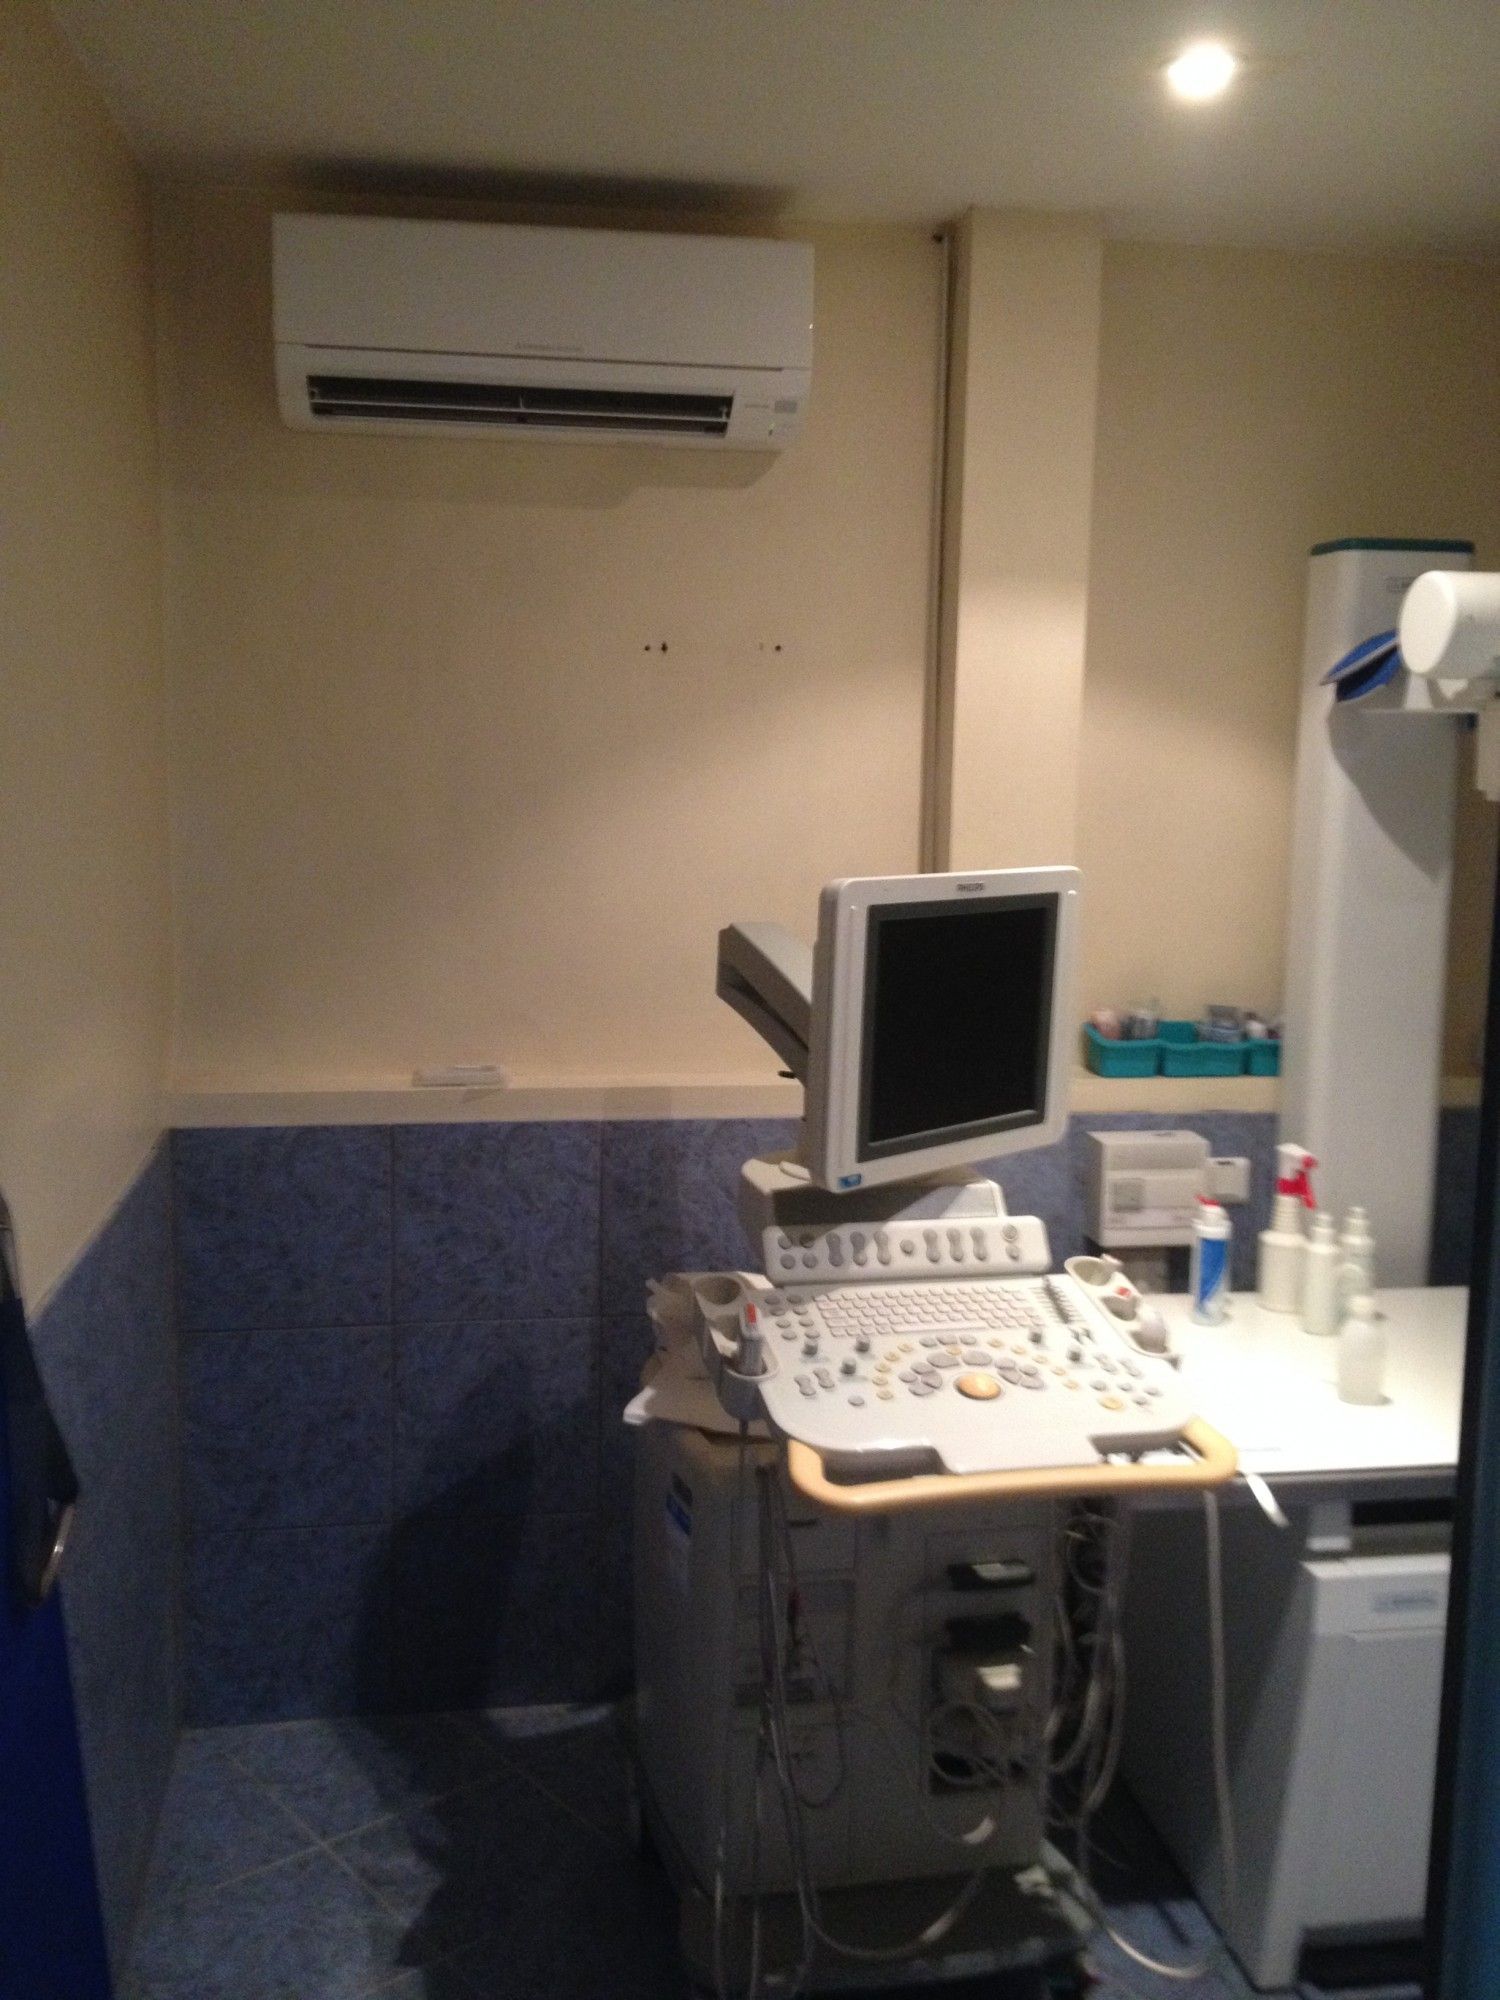 Climatisation en panne dans une salle de radiologie